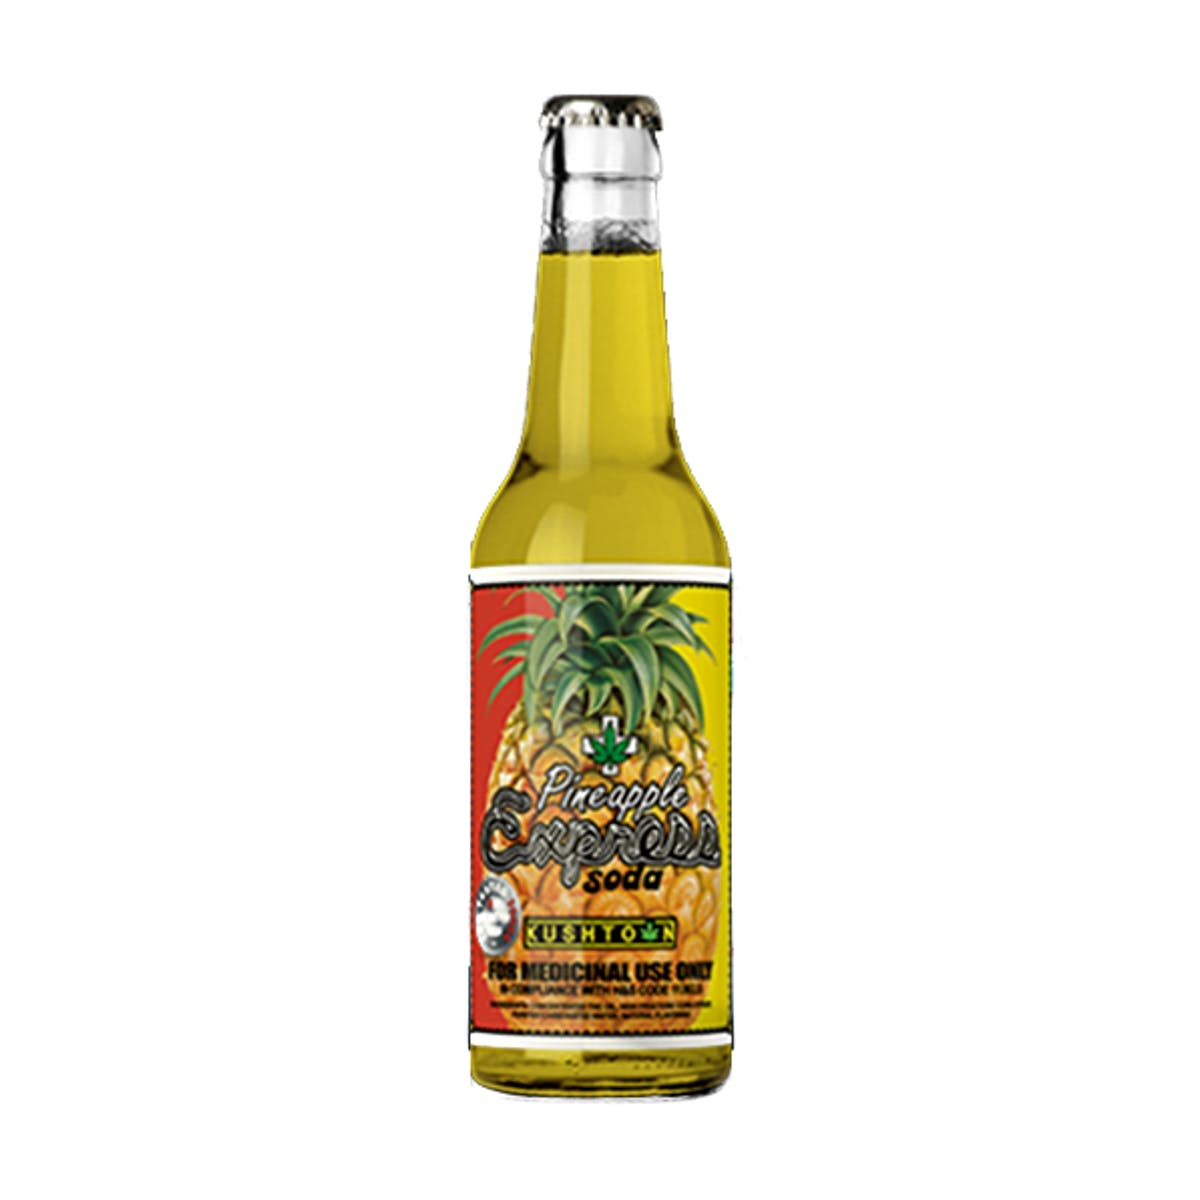 Pineapple Express Soda